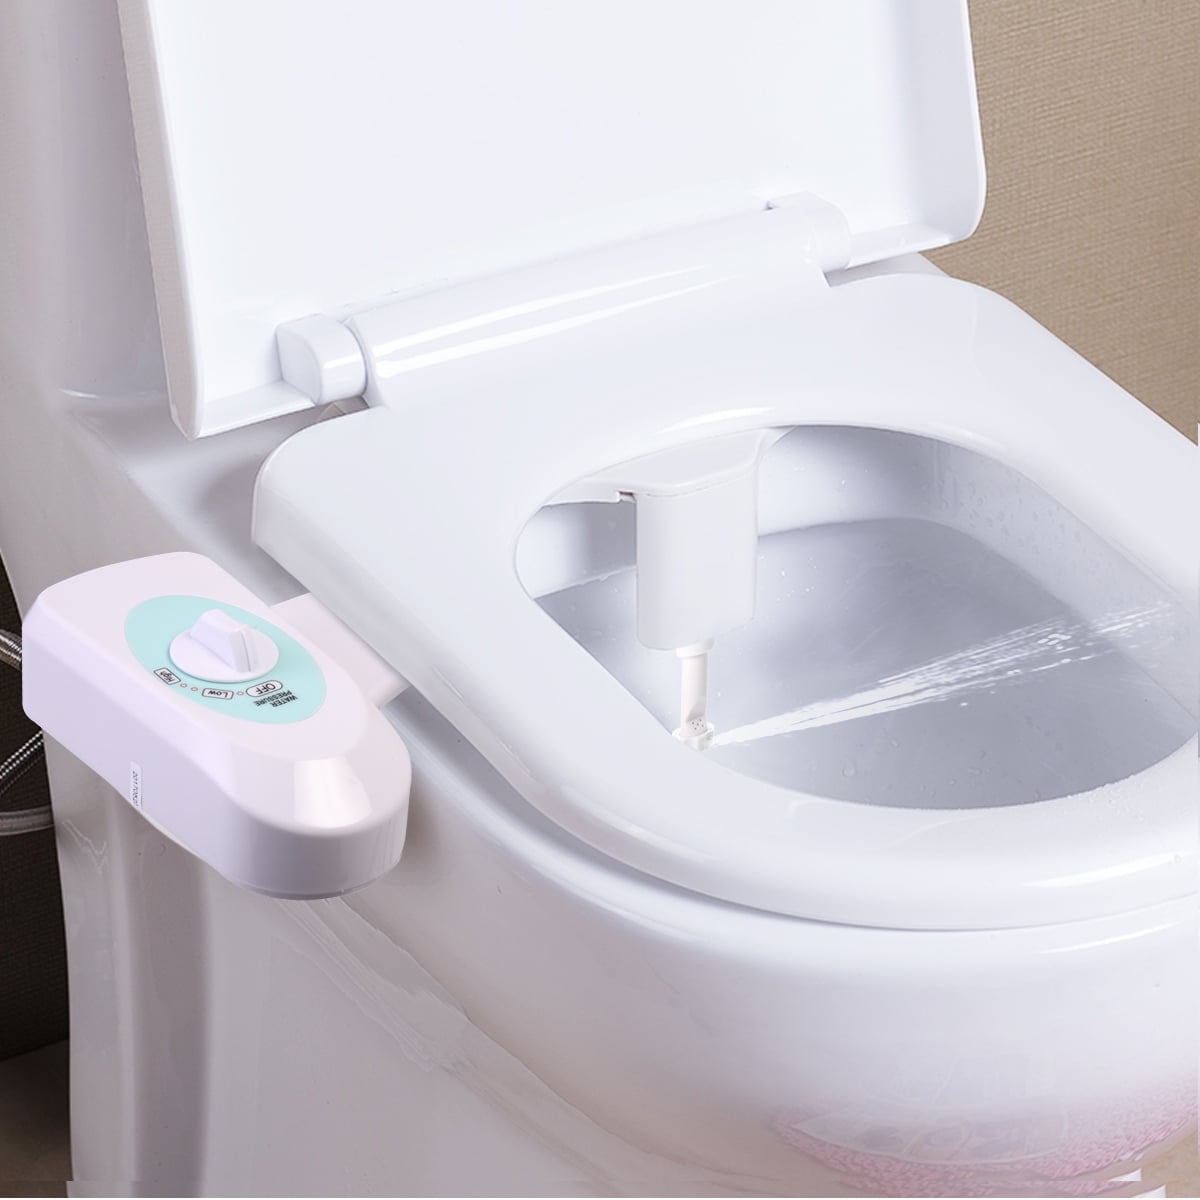 NEW Bidet Fresh Water Spray Mechanical Bidet Toilet Seat Attachment Non-Electric